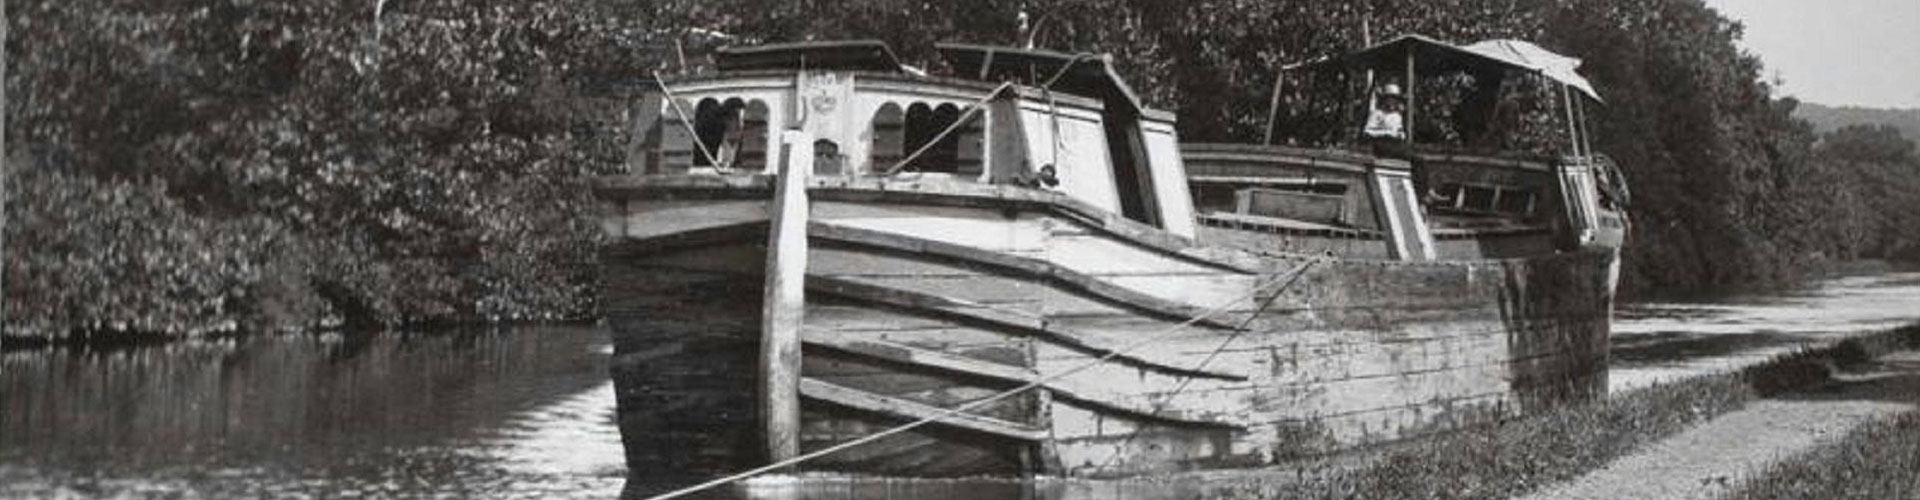 CanalBoat-1920-500